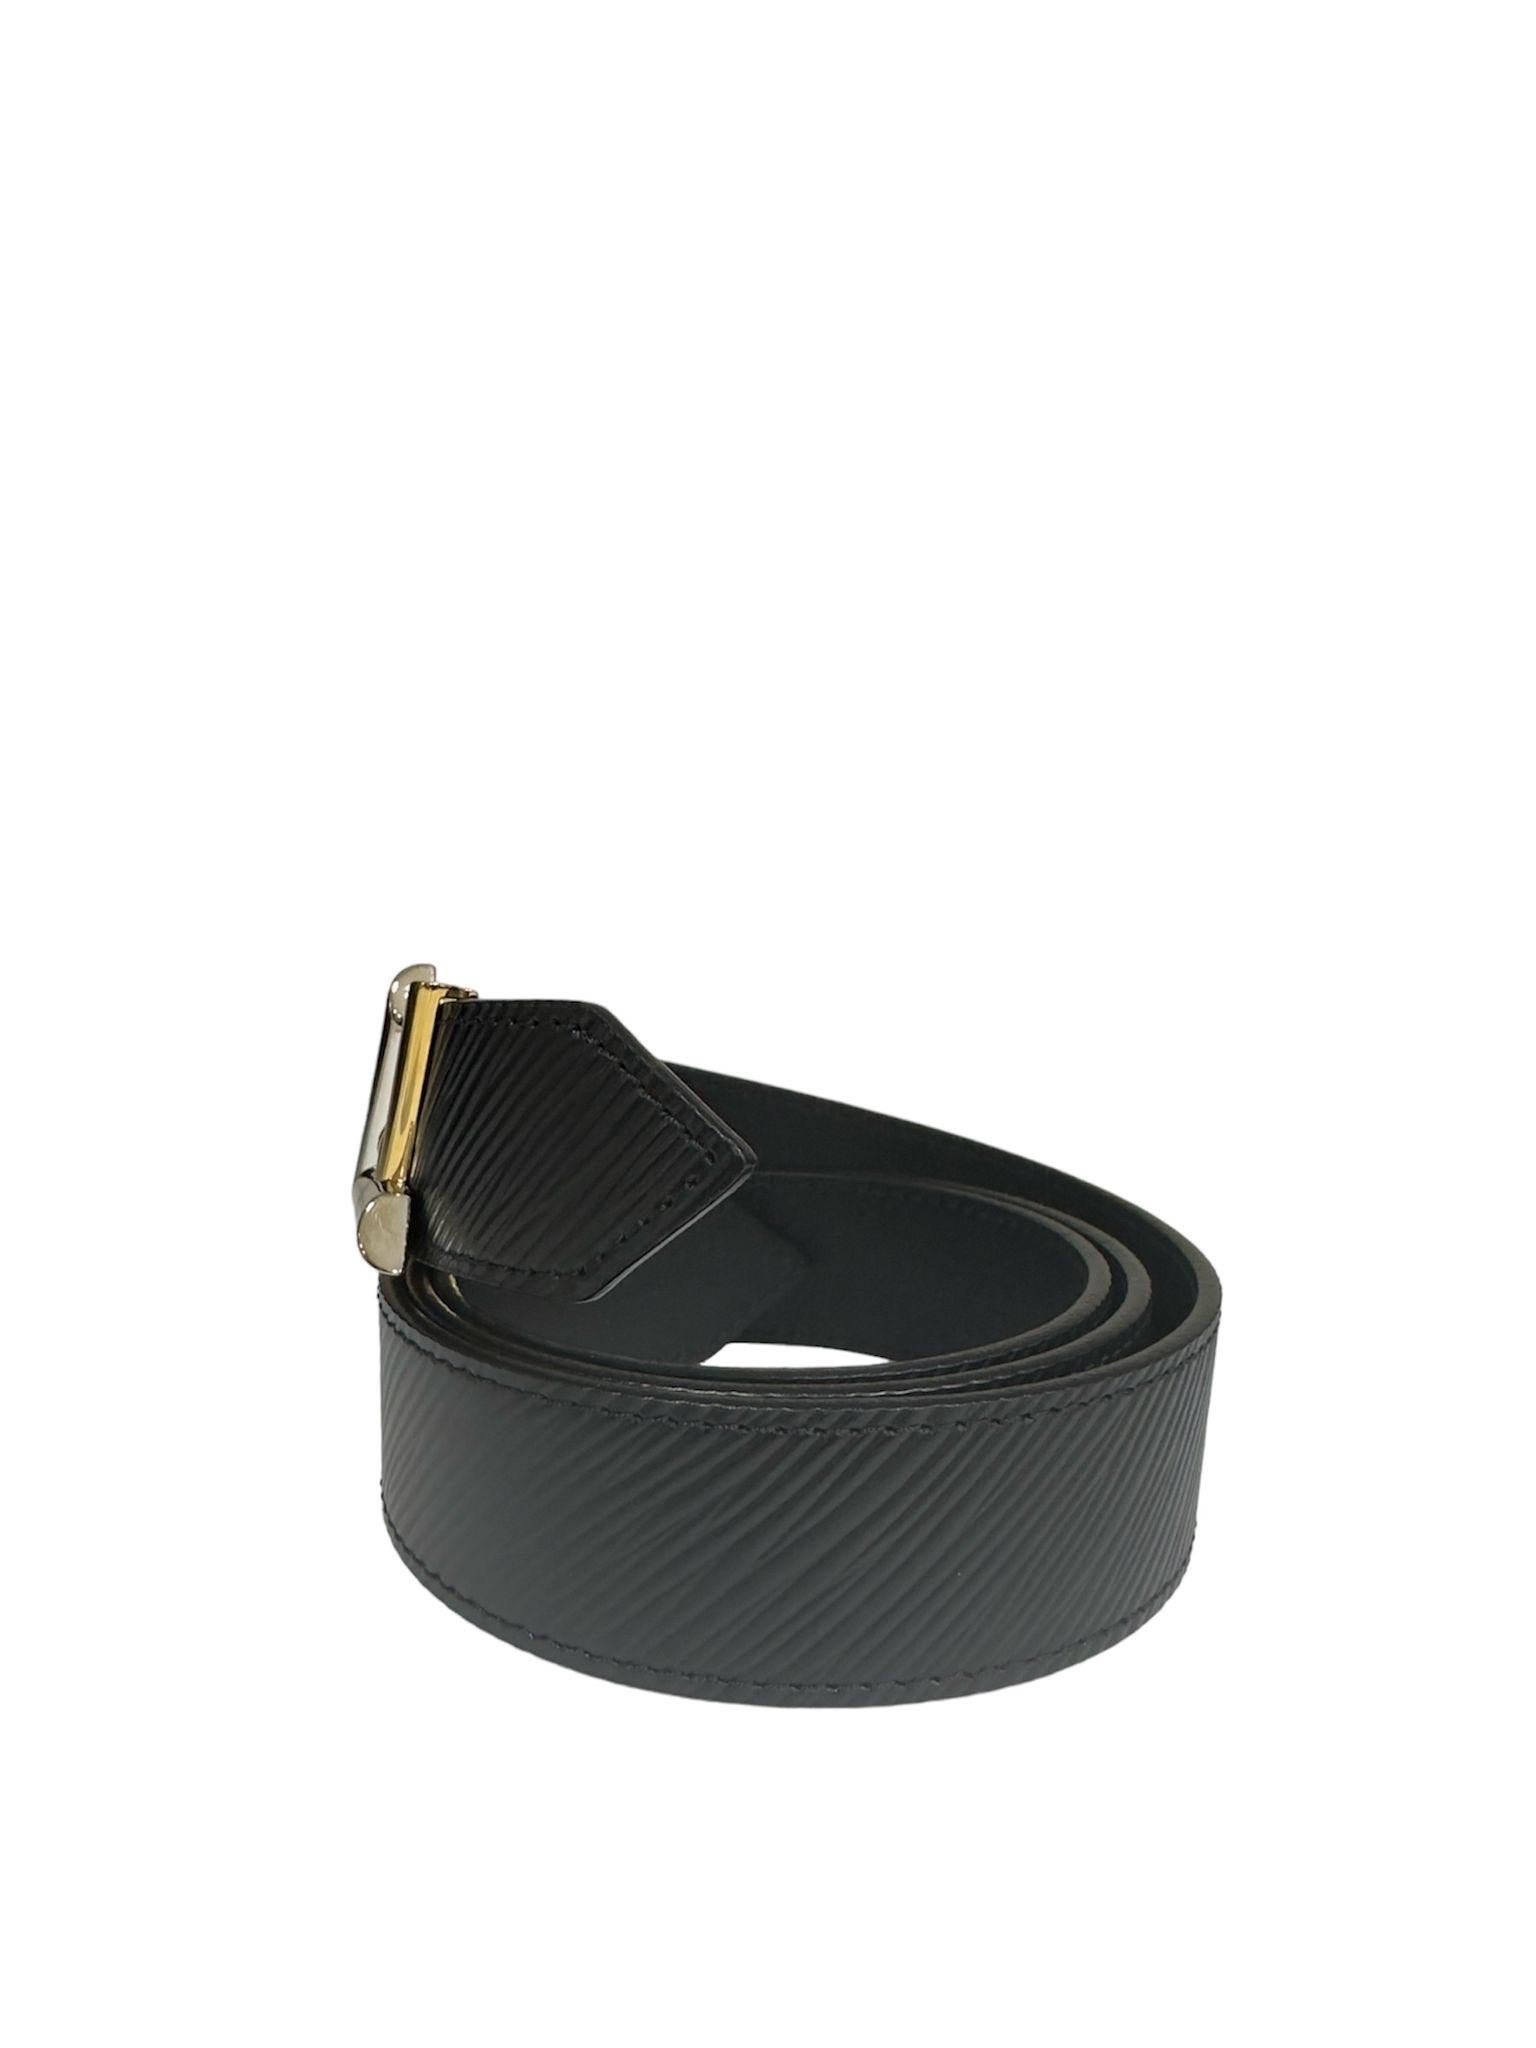 Cintura Louis Vuitton Cintura Twist Epi Nera In Excellent Condition For Sale In Torre Del Greco, IT